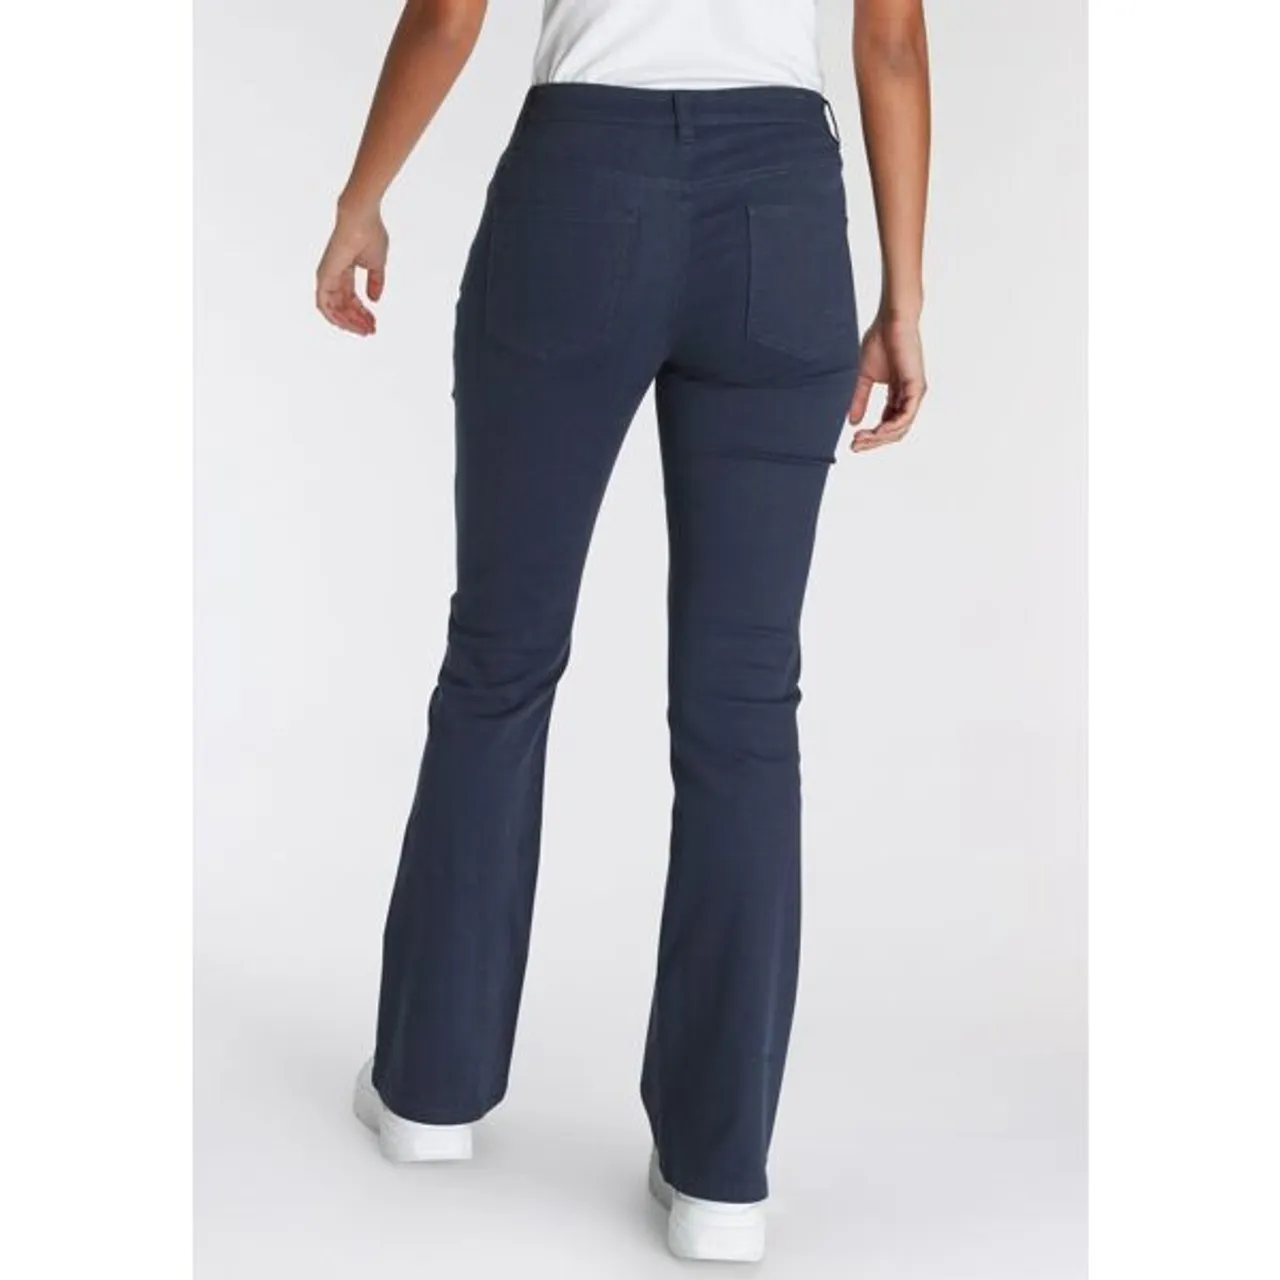 Bootcuthose AJC Gr. 38, N-Gr, blau (marine) Damen Hosen 5-Pocket-Hose Stoffhosen mit Knopfleiste im 5-Pocket-Stil